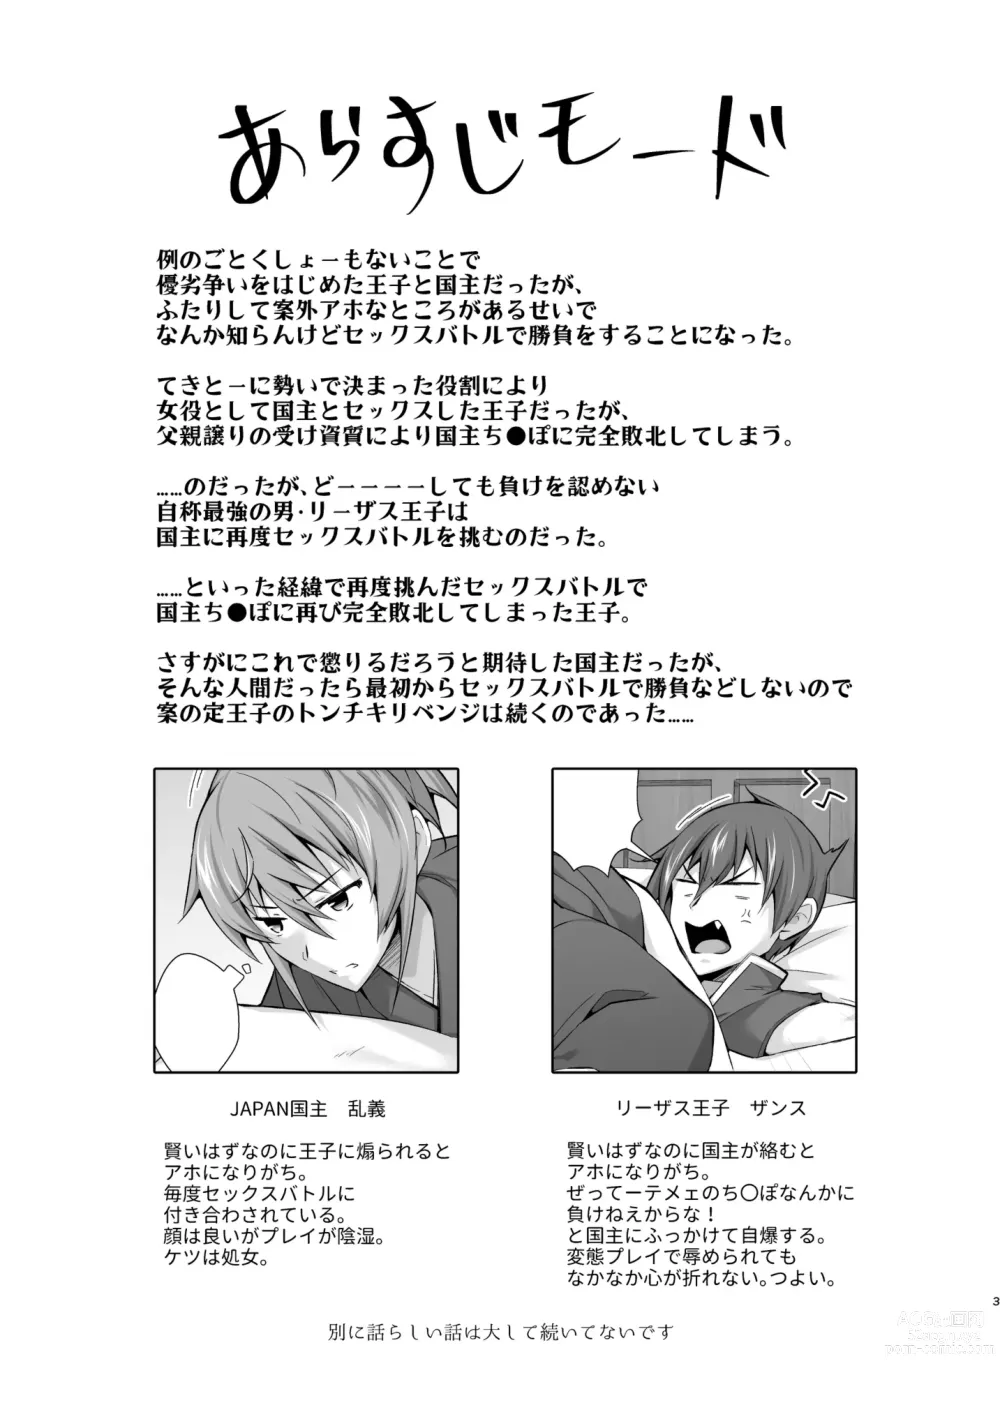 Page 3 of doujinshi Anmari Korinai Leazas Ouji no Erohon